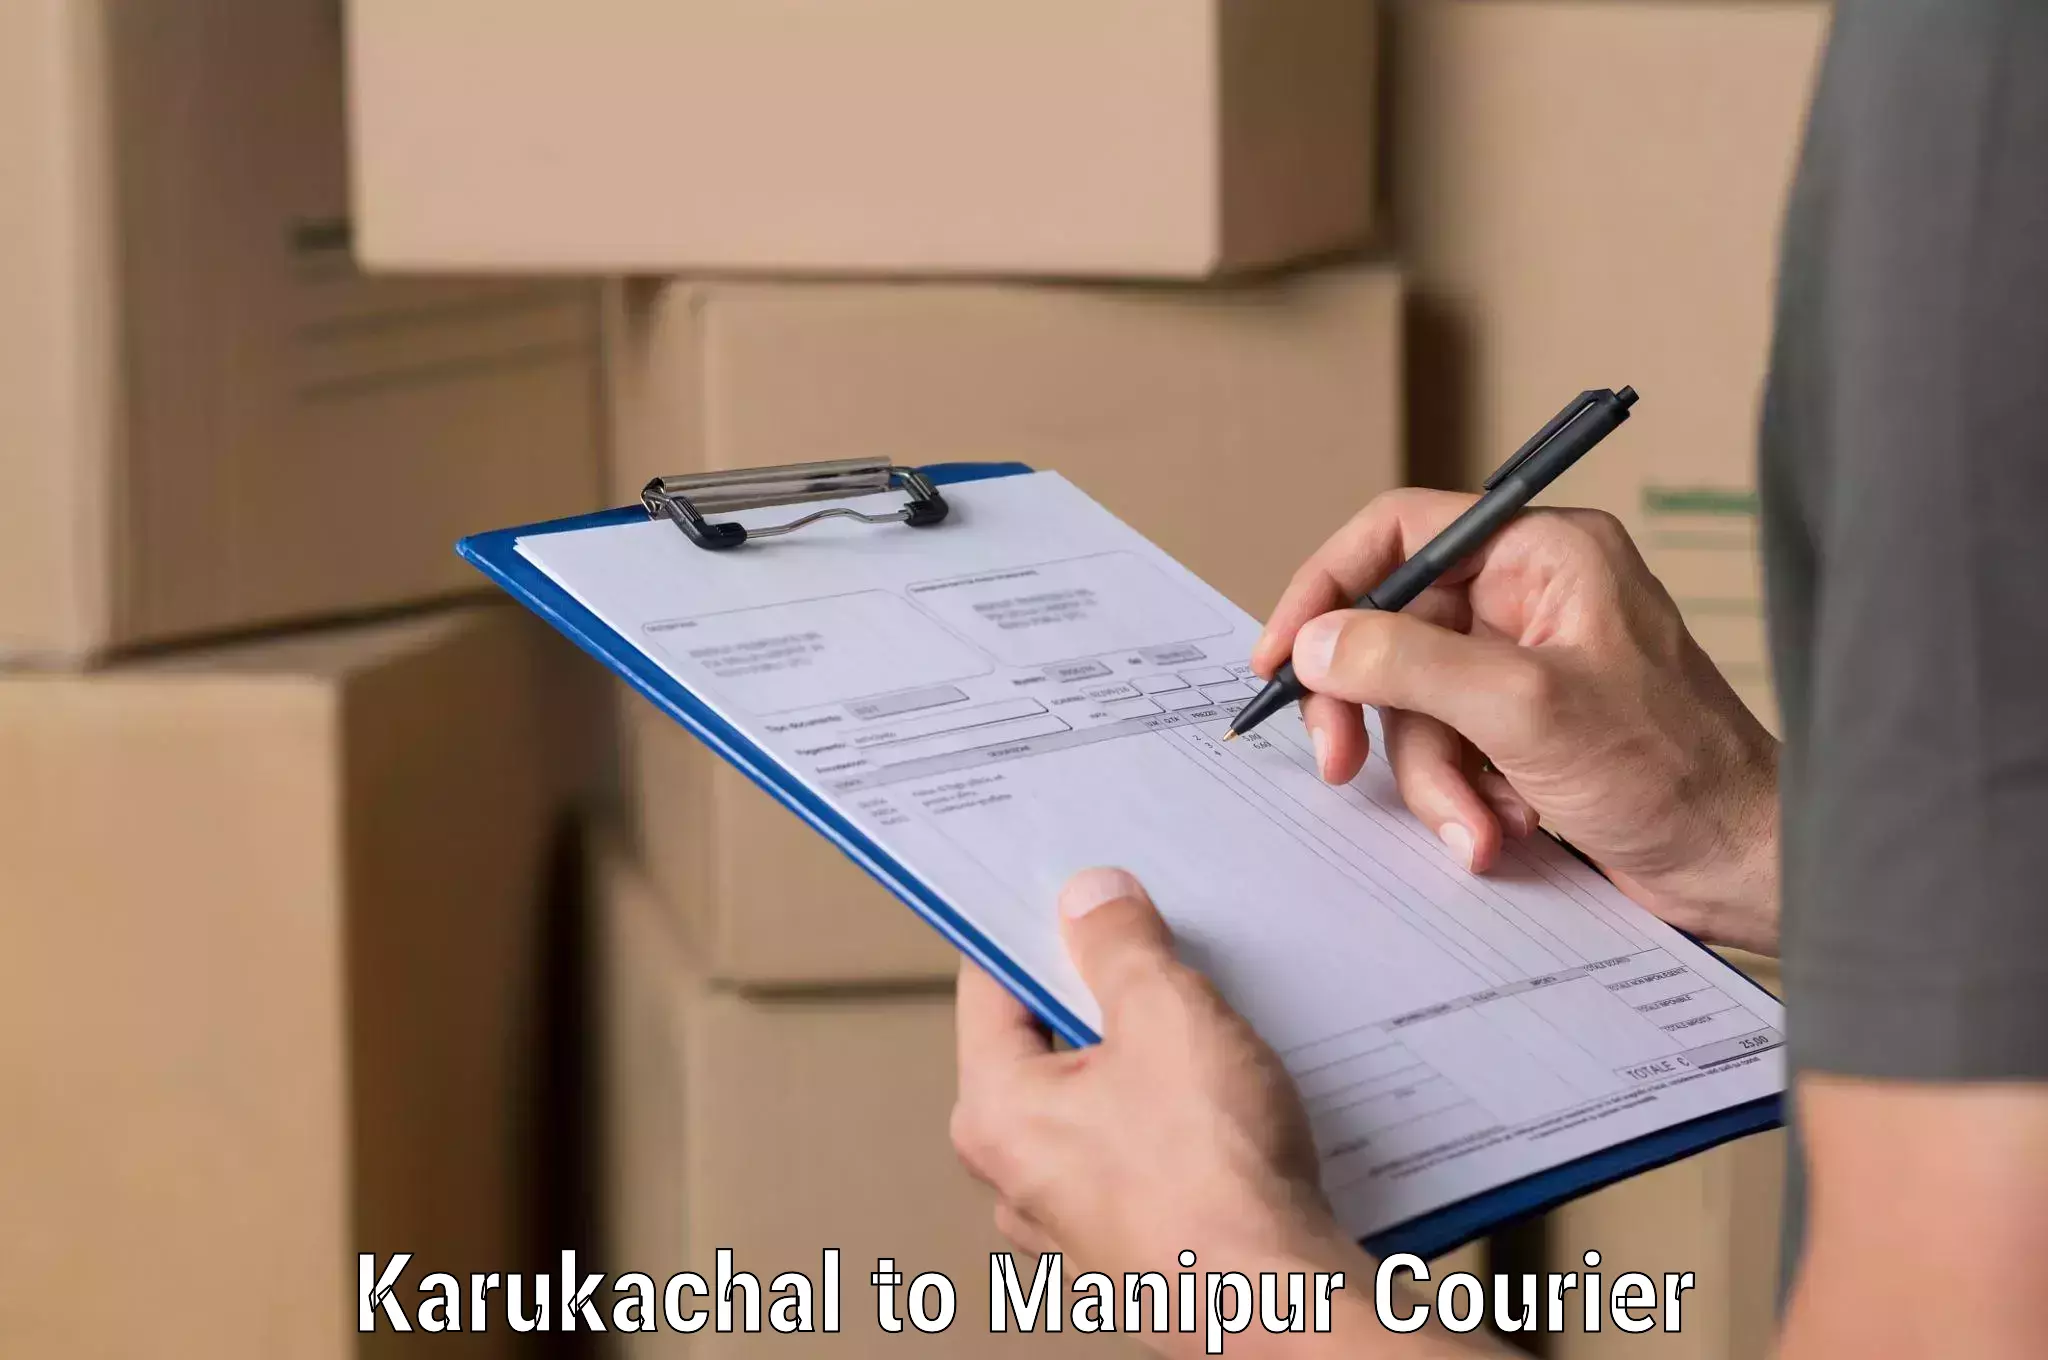 Logistics service provider Karukachal to Manipur